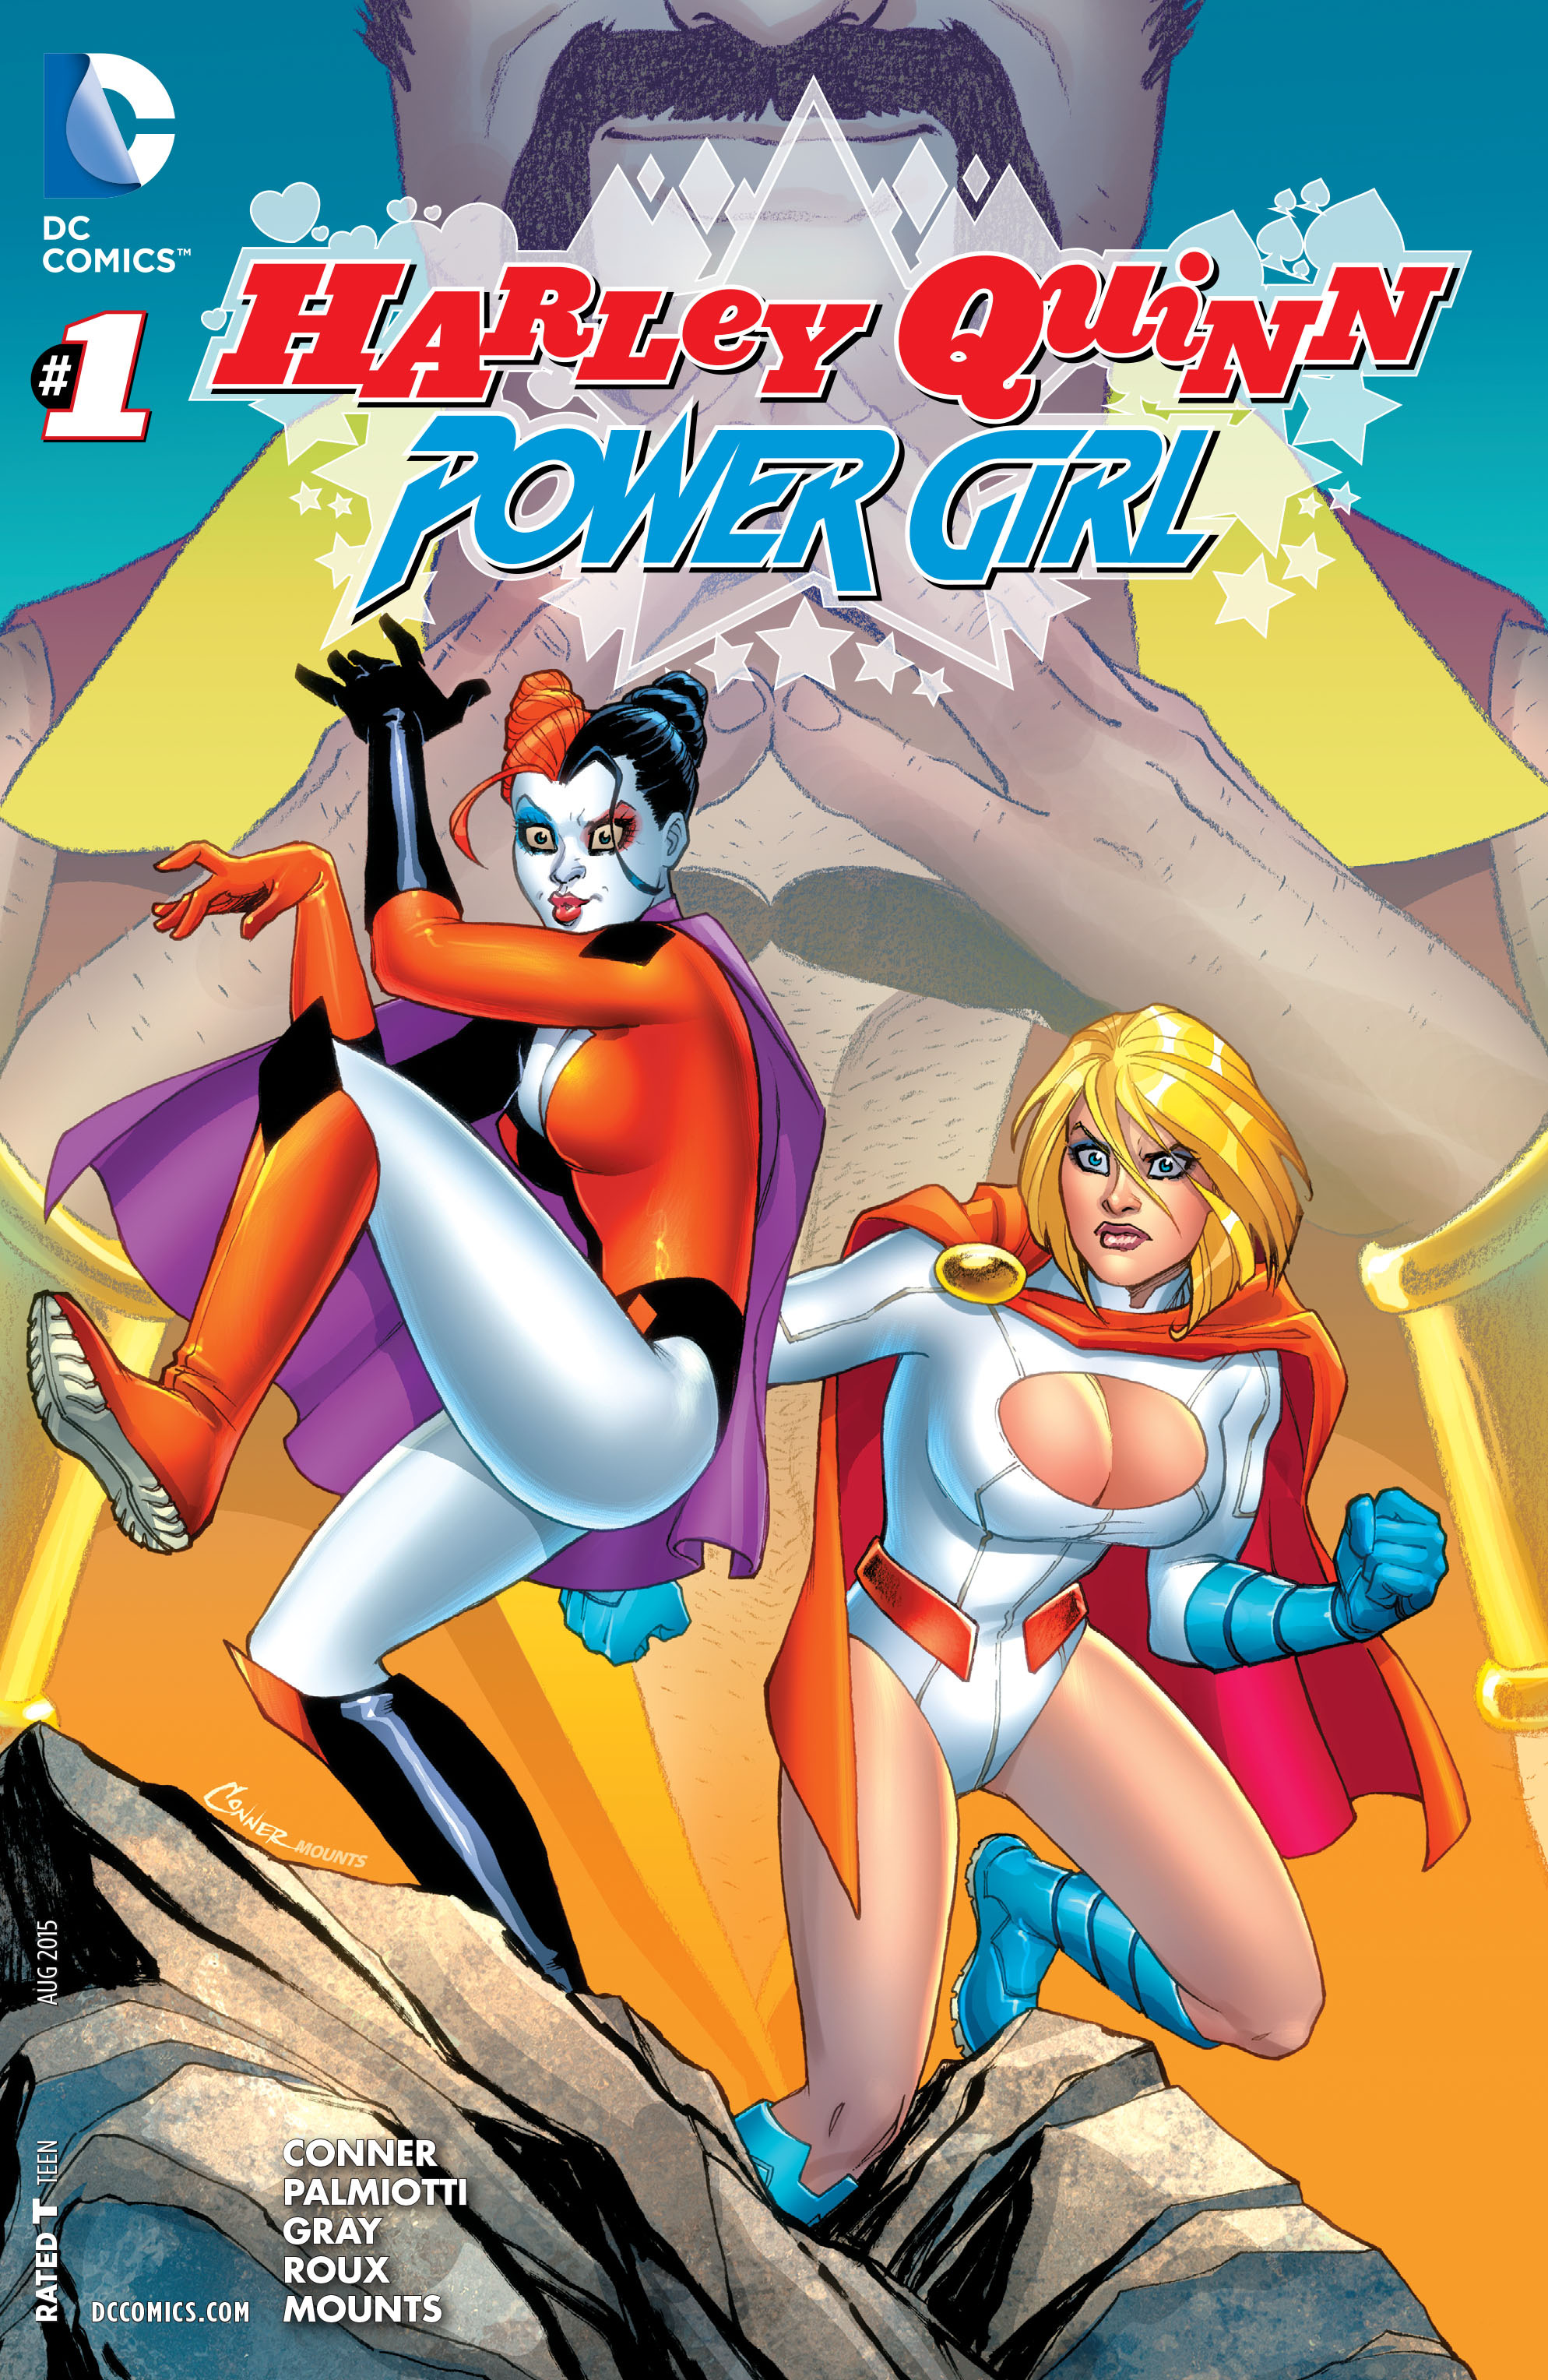 Black Widow Power Girl Porn - Harley Quinn and Power Girl | Viewcomic reading comics ...